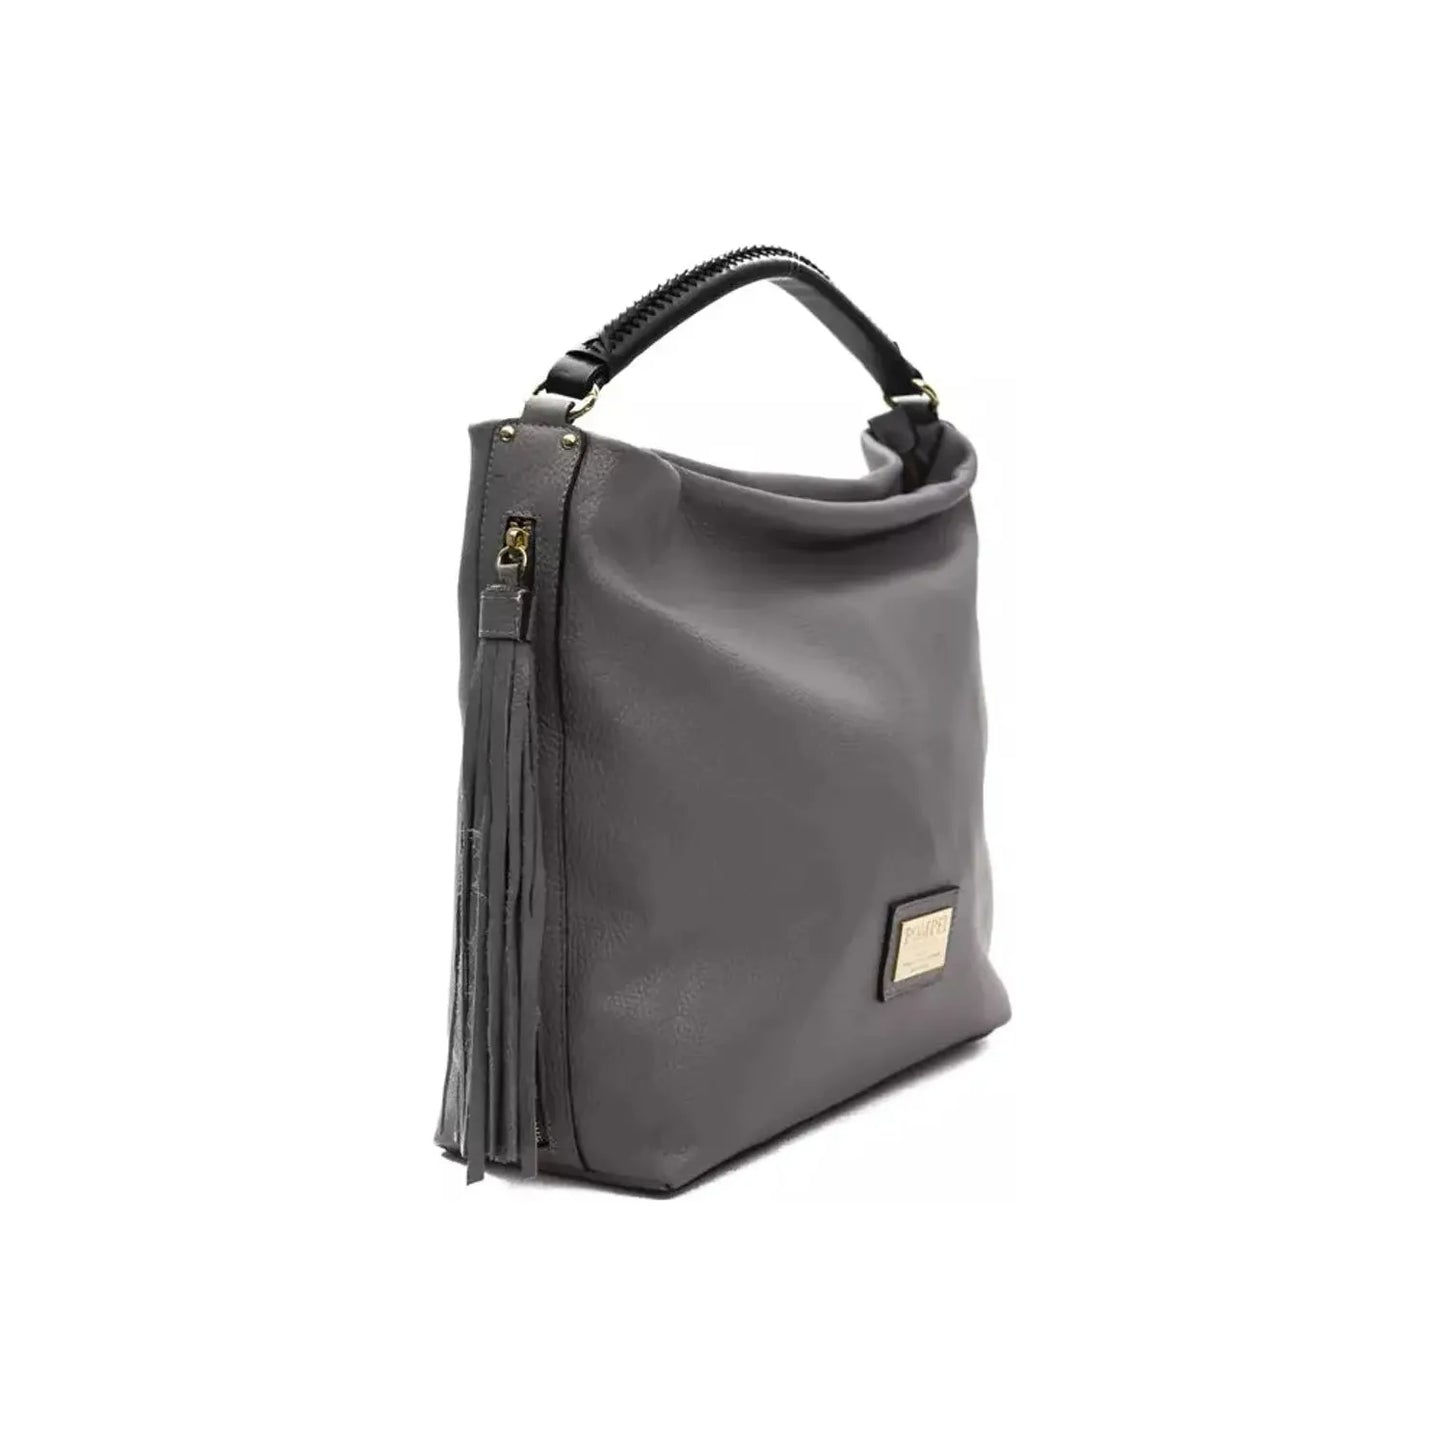 Pompei Donatella Chic Gray Leather Shoulder Bag WOMAN SHOULDER BAGS gray-leather-shoulder-bag-2 stock_product_image_5800_1513917795-22-541facc8-33f.webp